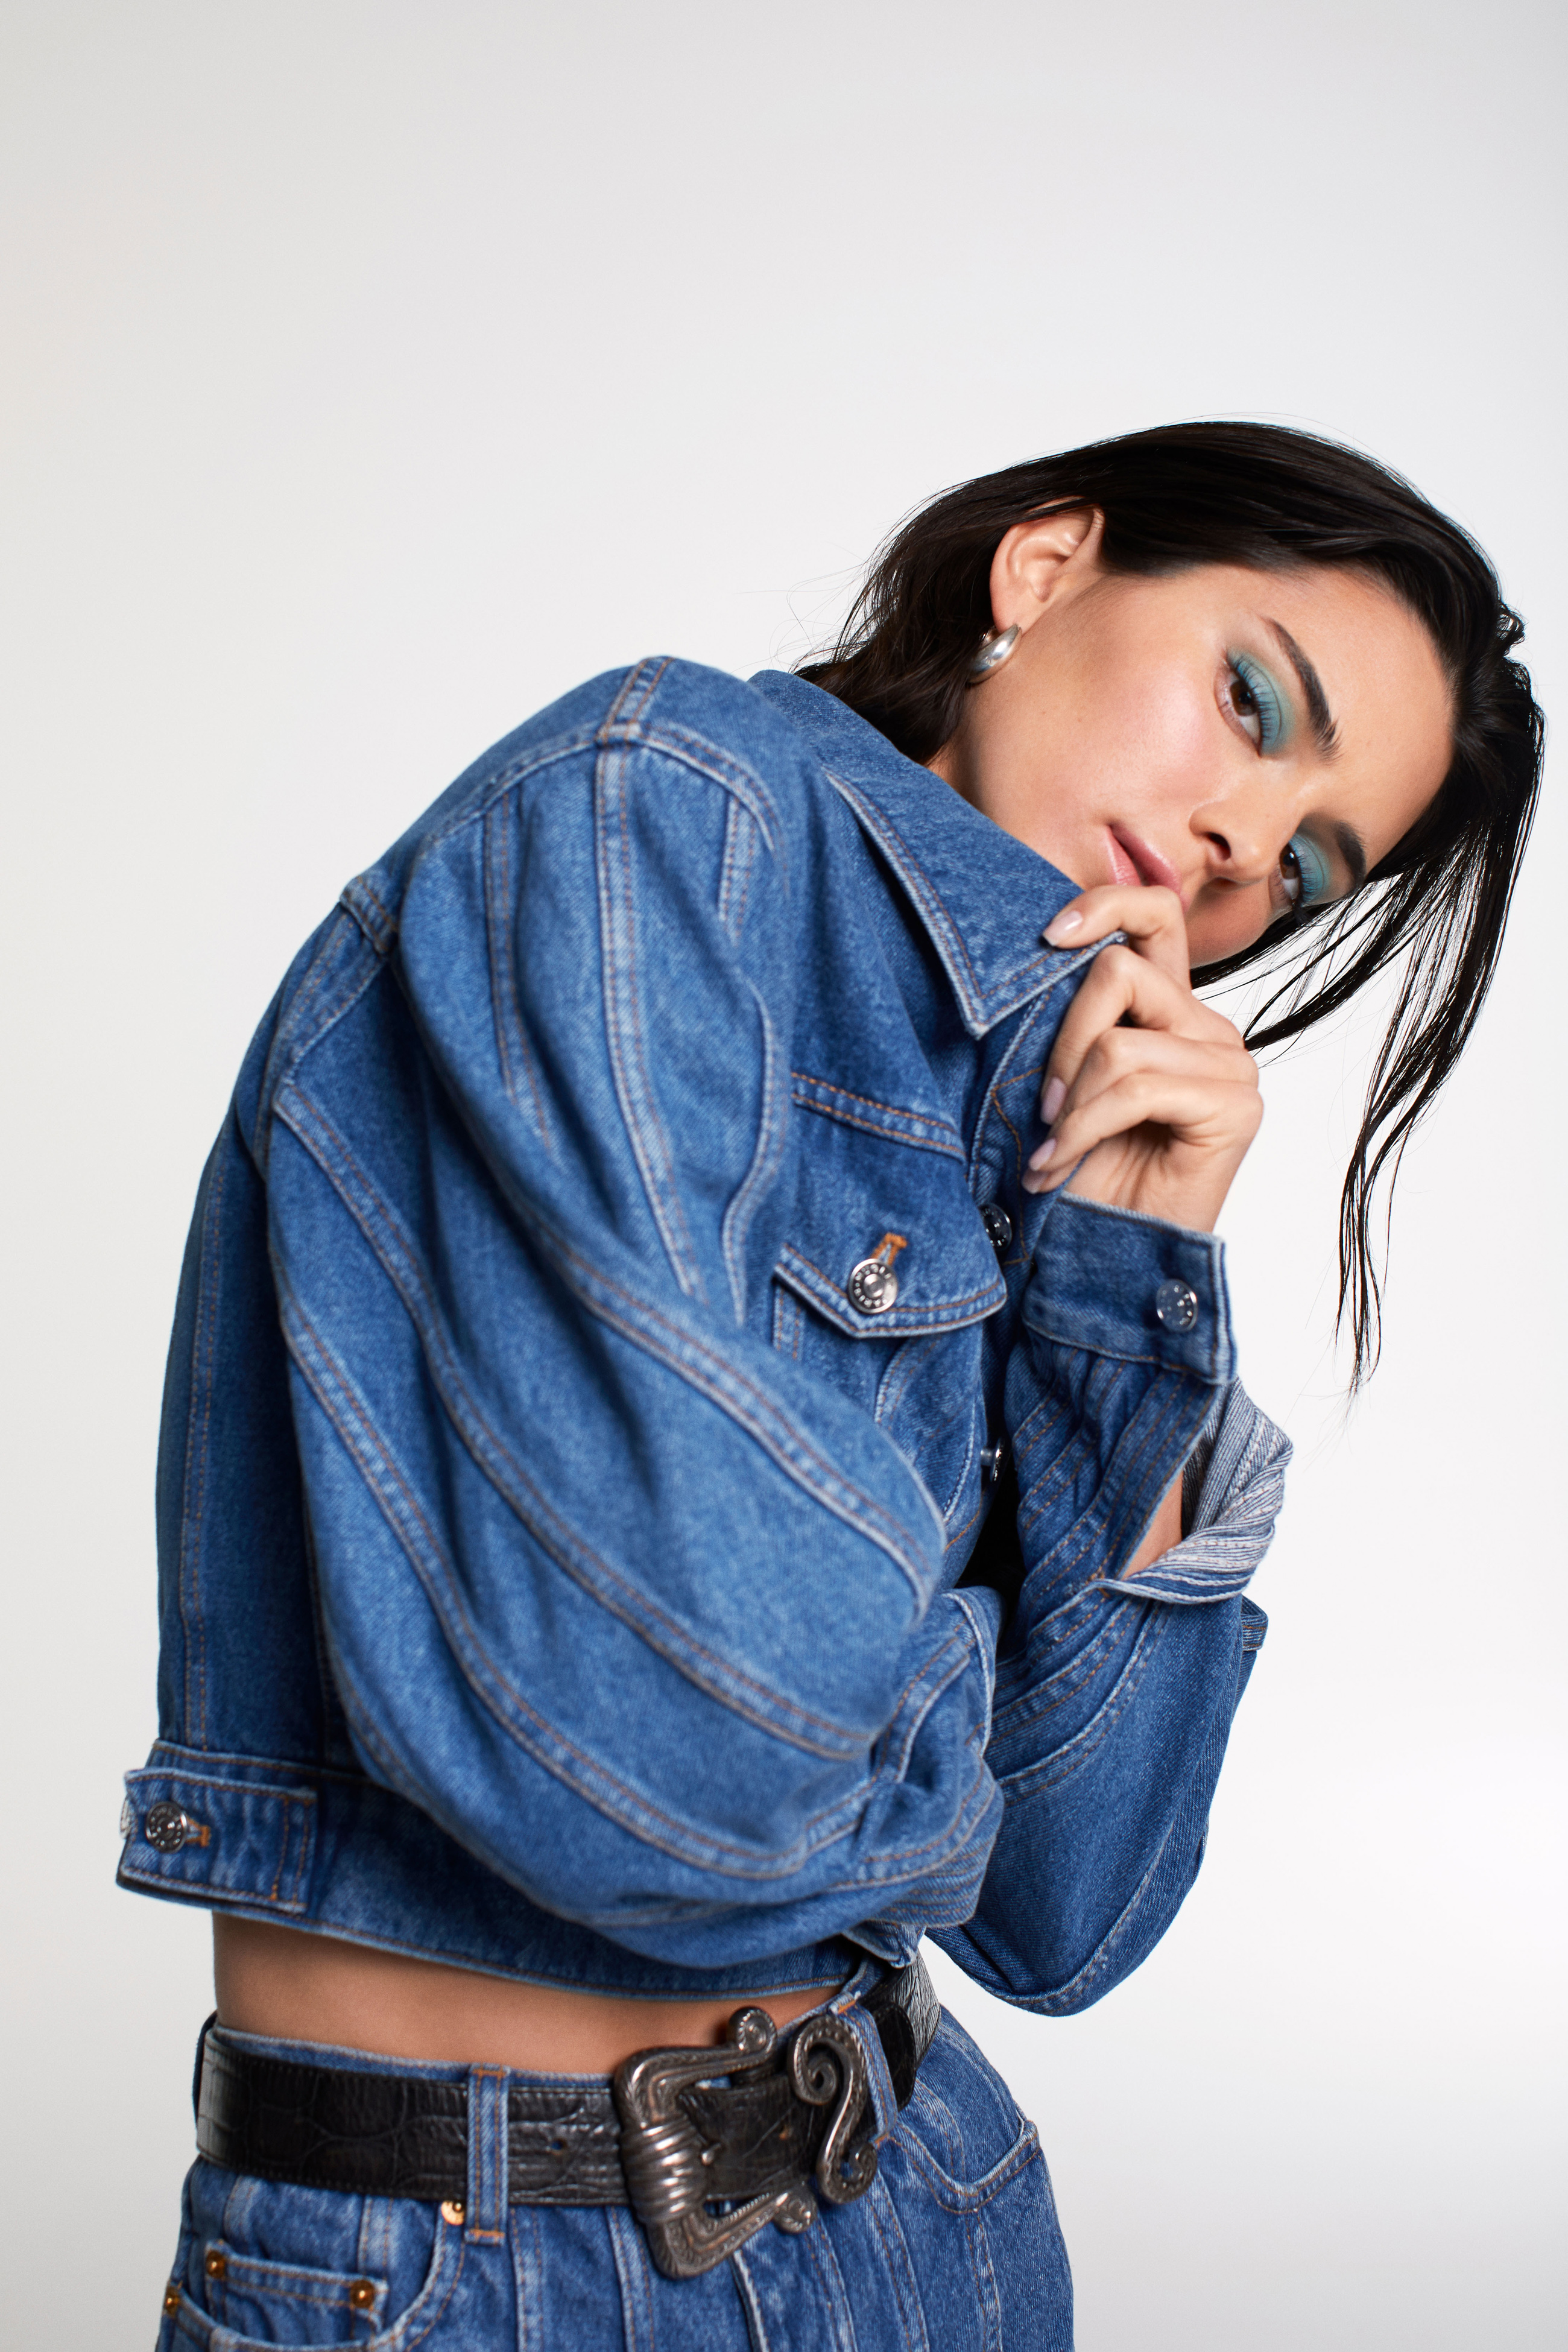 Kendall Jenner Women Model Makeup Brunette Long Hair Dark Hair Jean Jacket Jeans Standing Women Indo 2600x3900